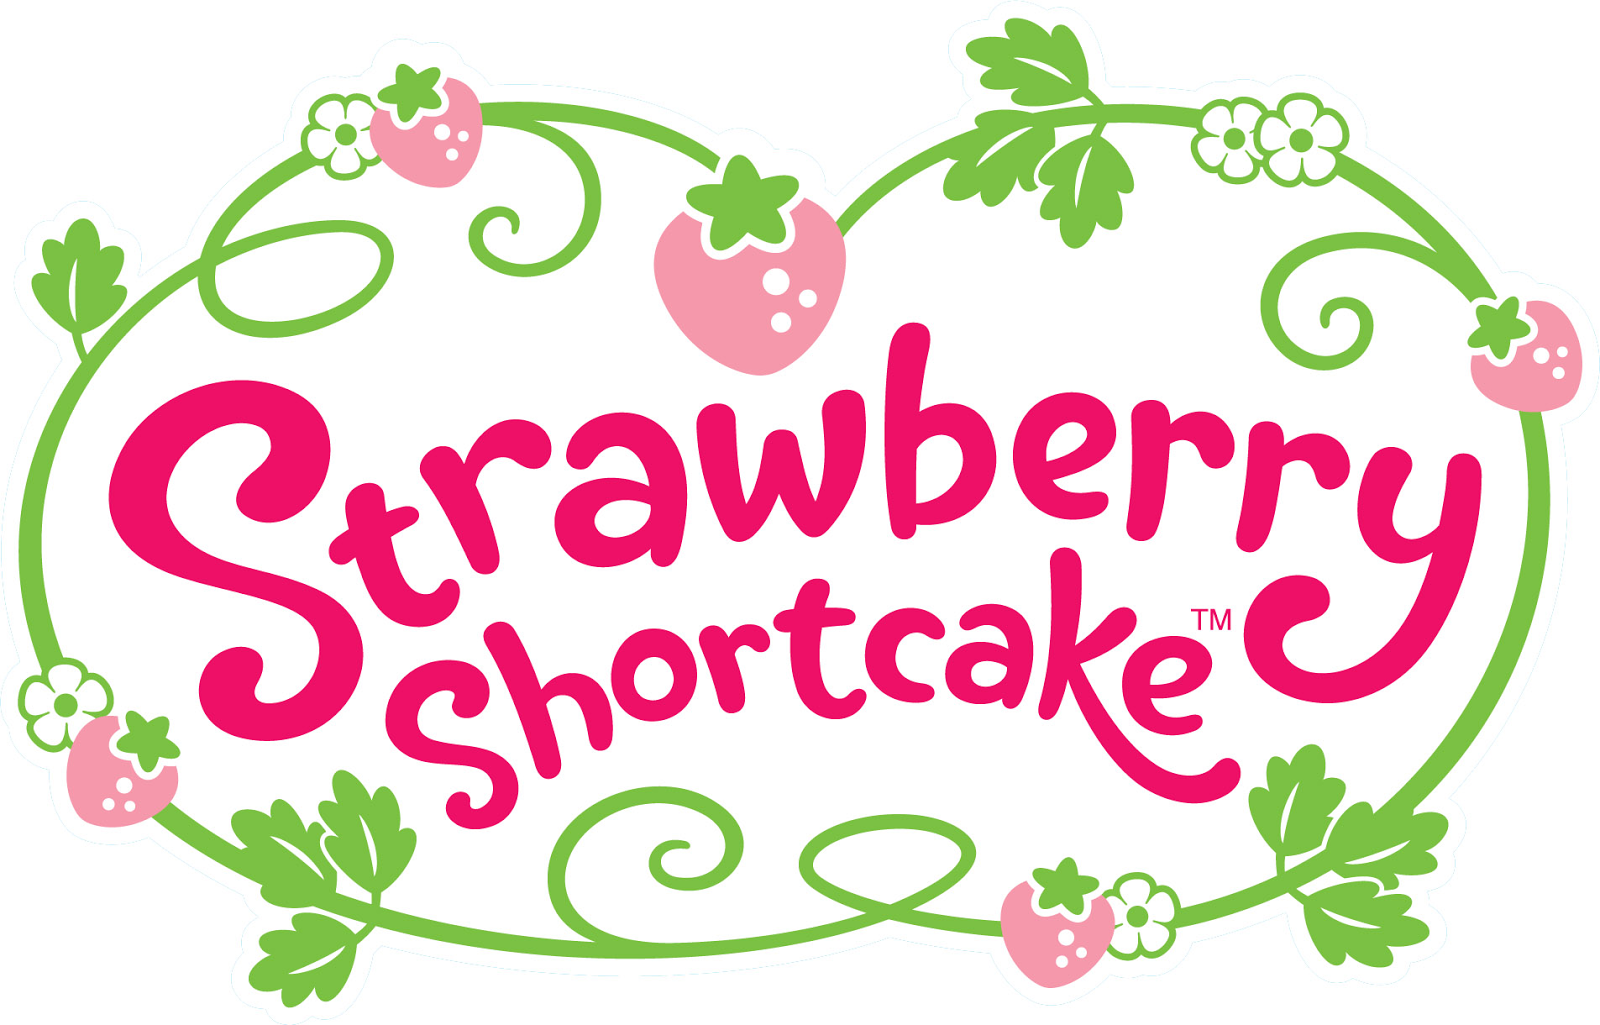 Wallpaper For Baby Strawberry Shortcake